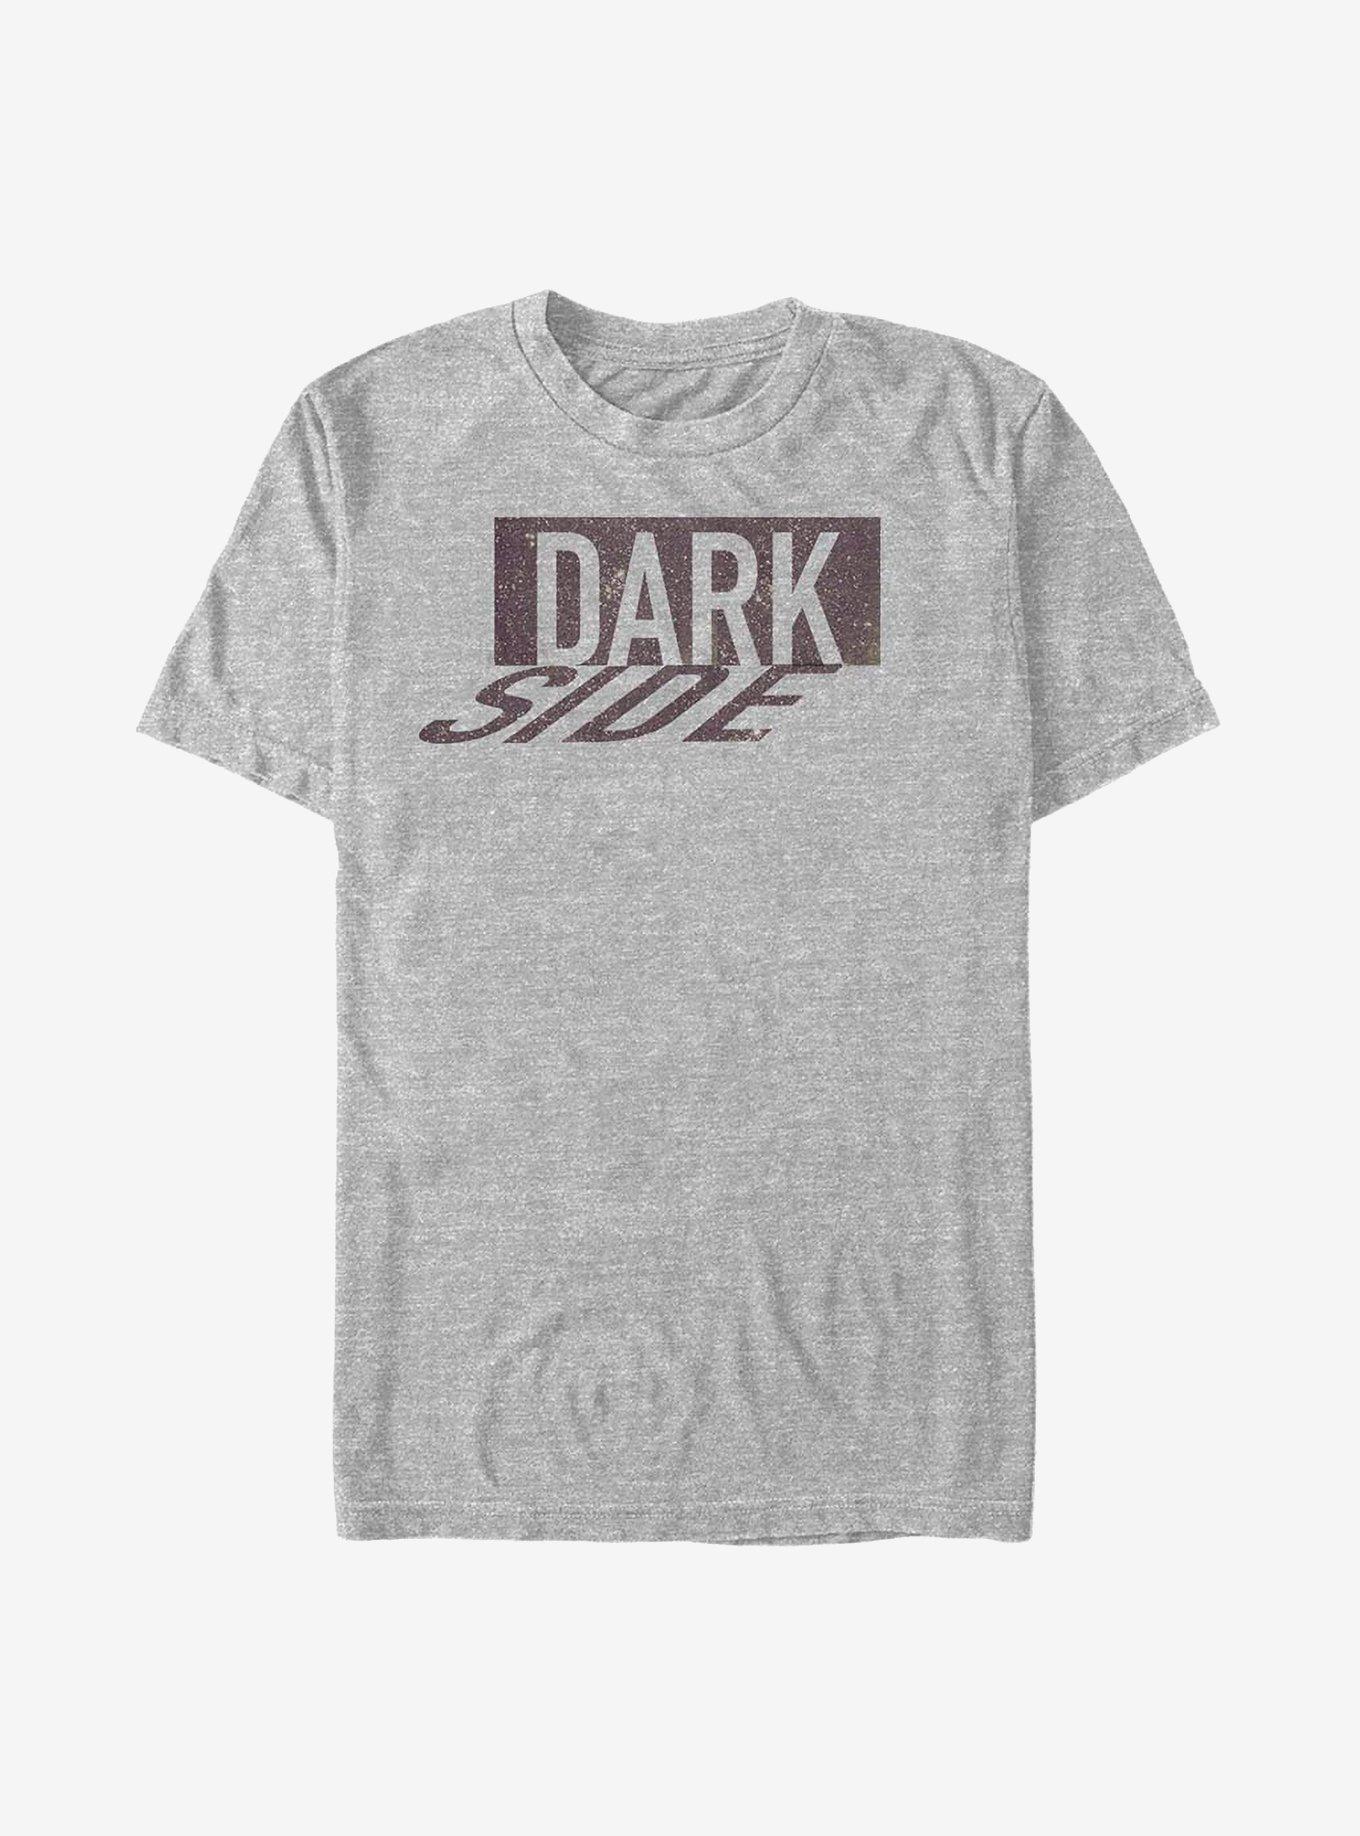 Star Wars Dark Shadow T-Shirt